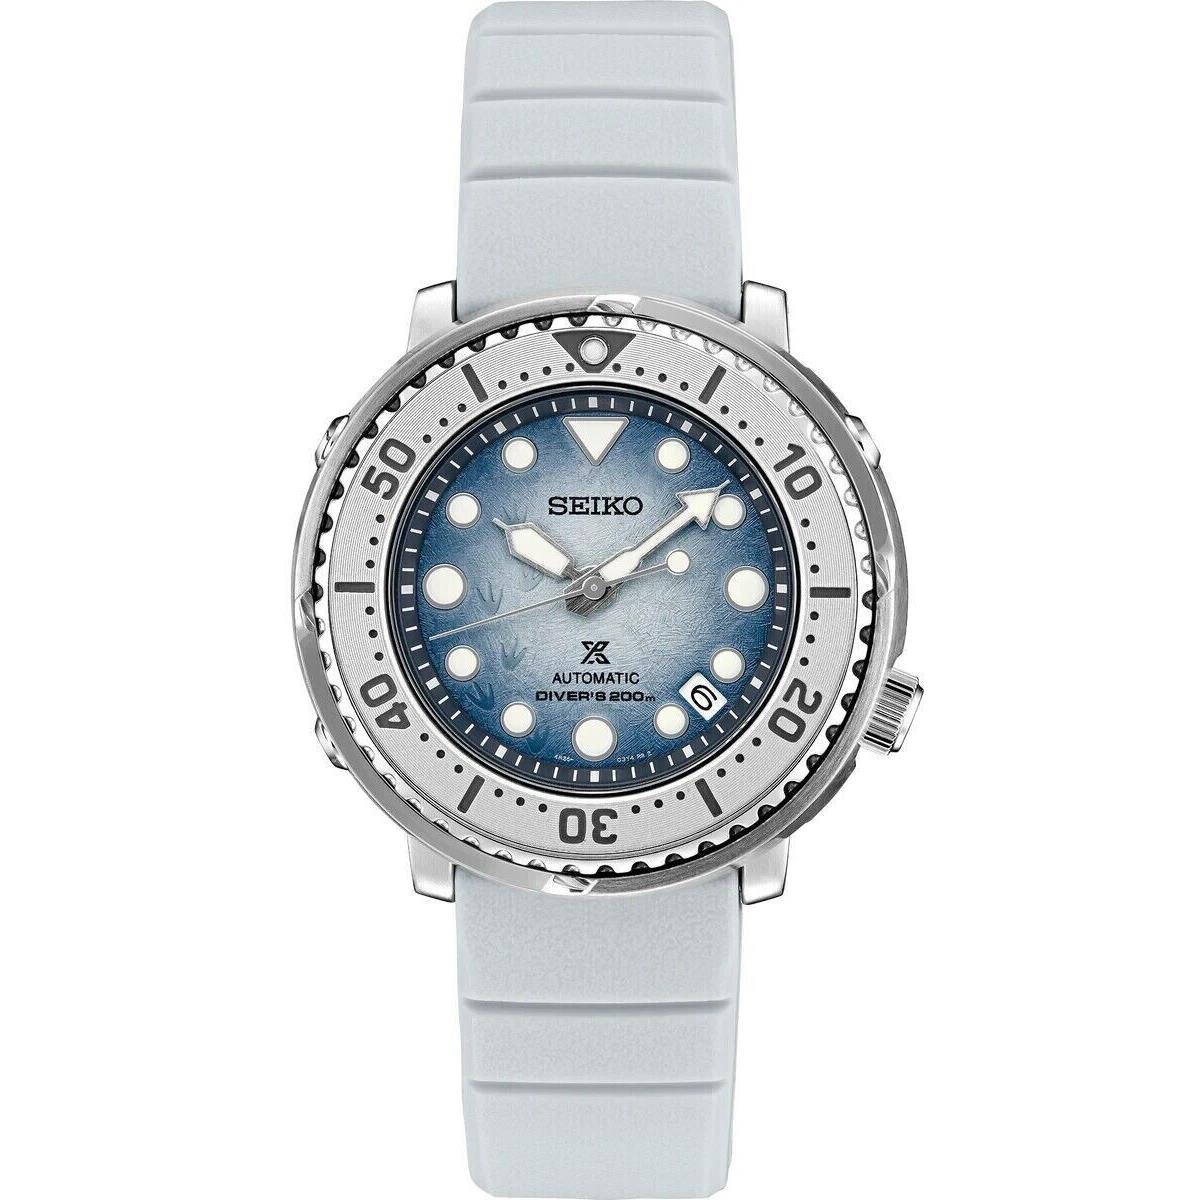 Seiko Prospex Blue Tuna Watch - SRPG59 Save The Ocean Sp. Ed. us Model